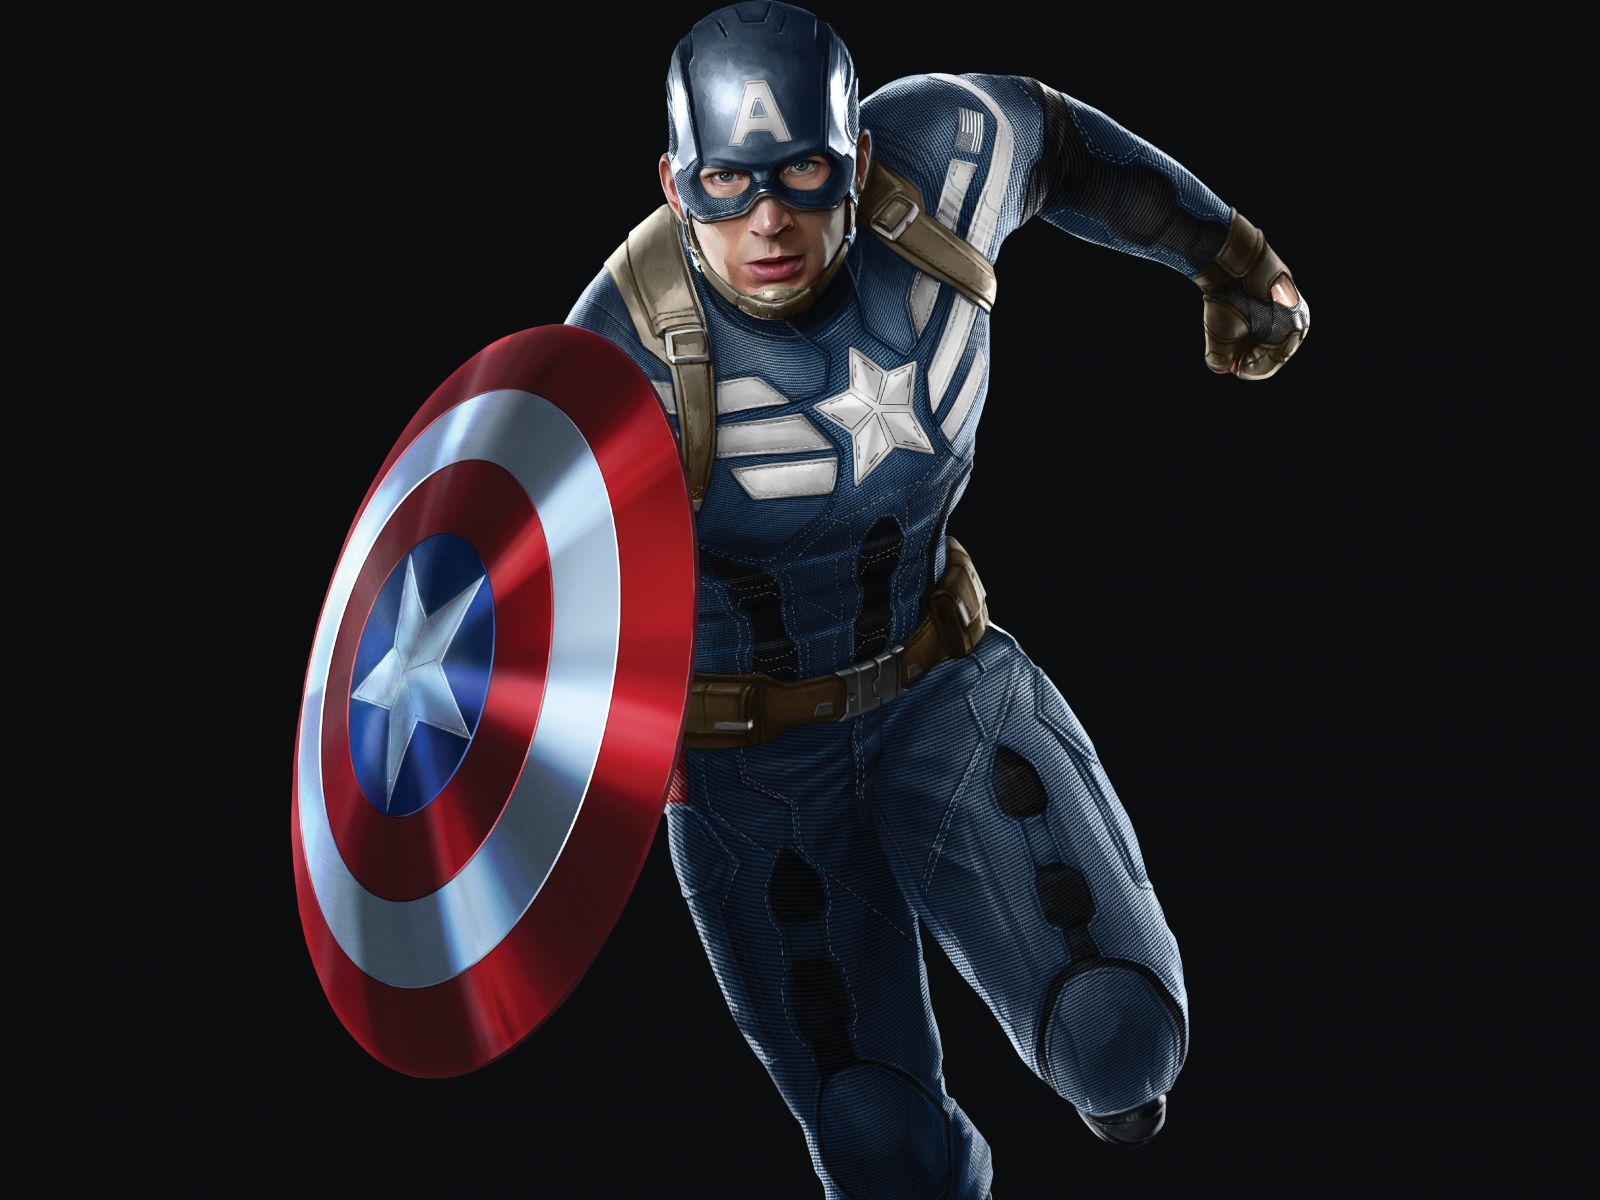 Download 1600x1200 wallpaper captain america, superhero, marvel comics, standard 4: fullscreen, 1600x1200 HD image, background, 5144